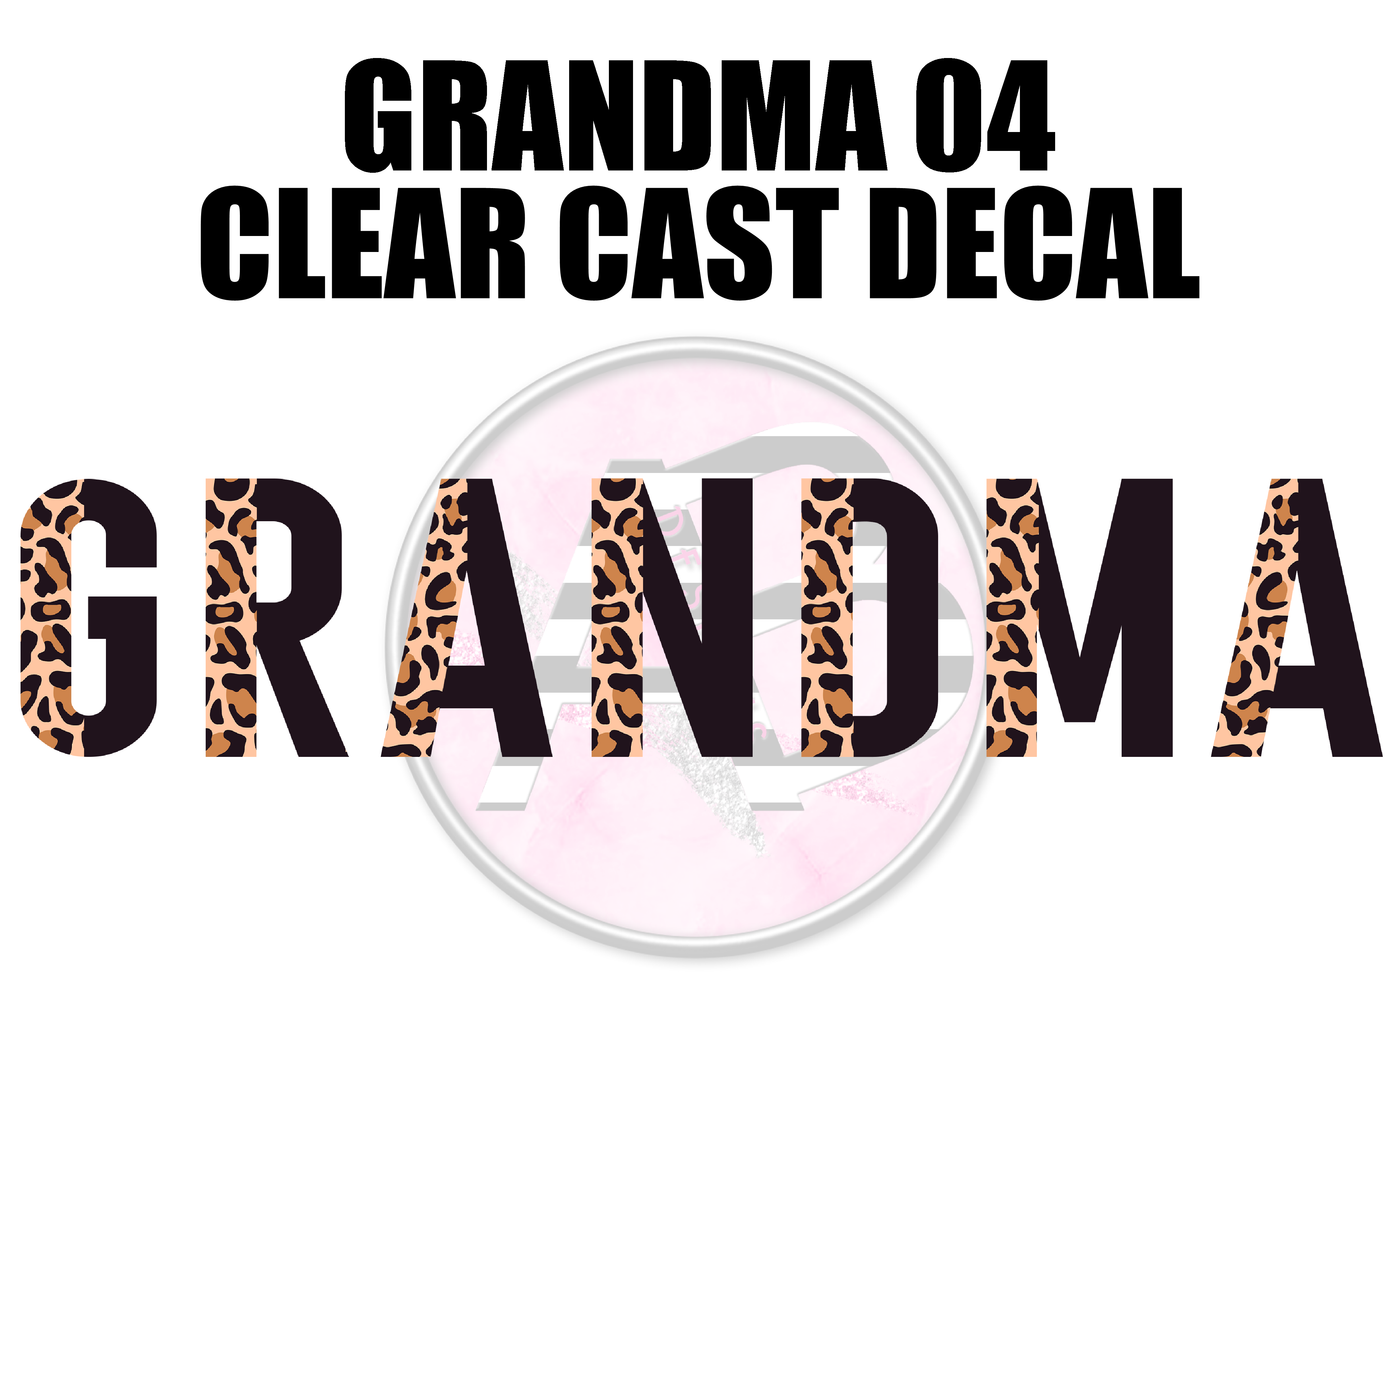 Grandma 04 - Clear Cast Decal